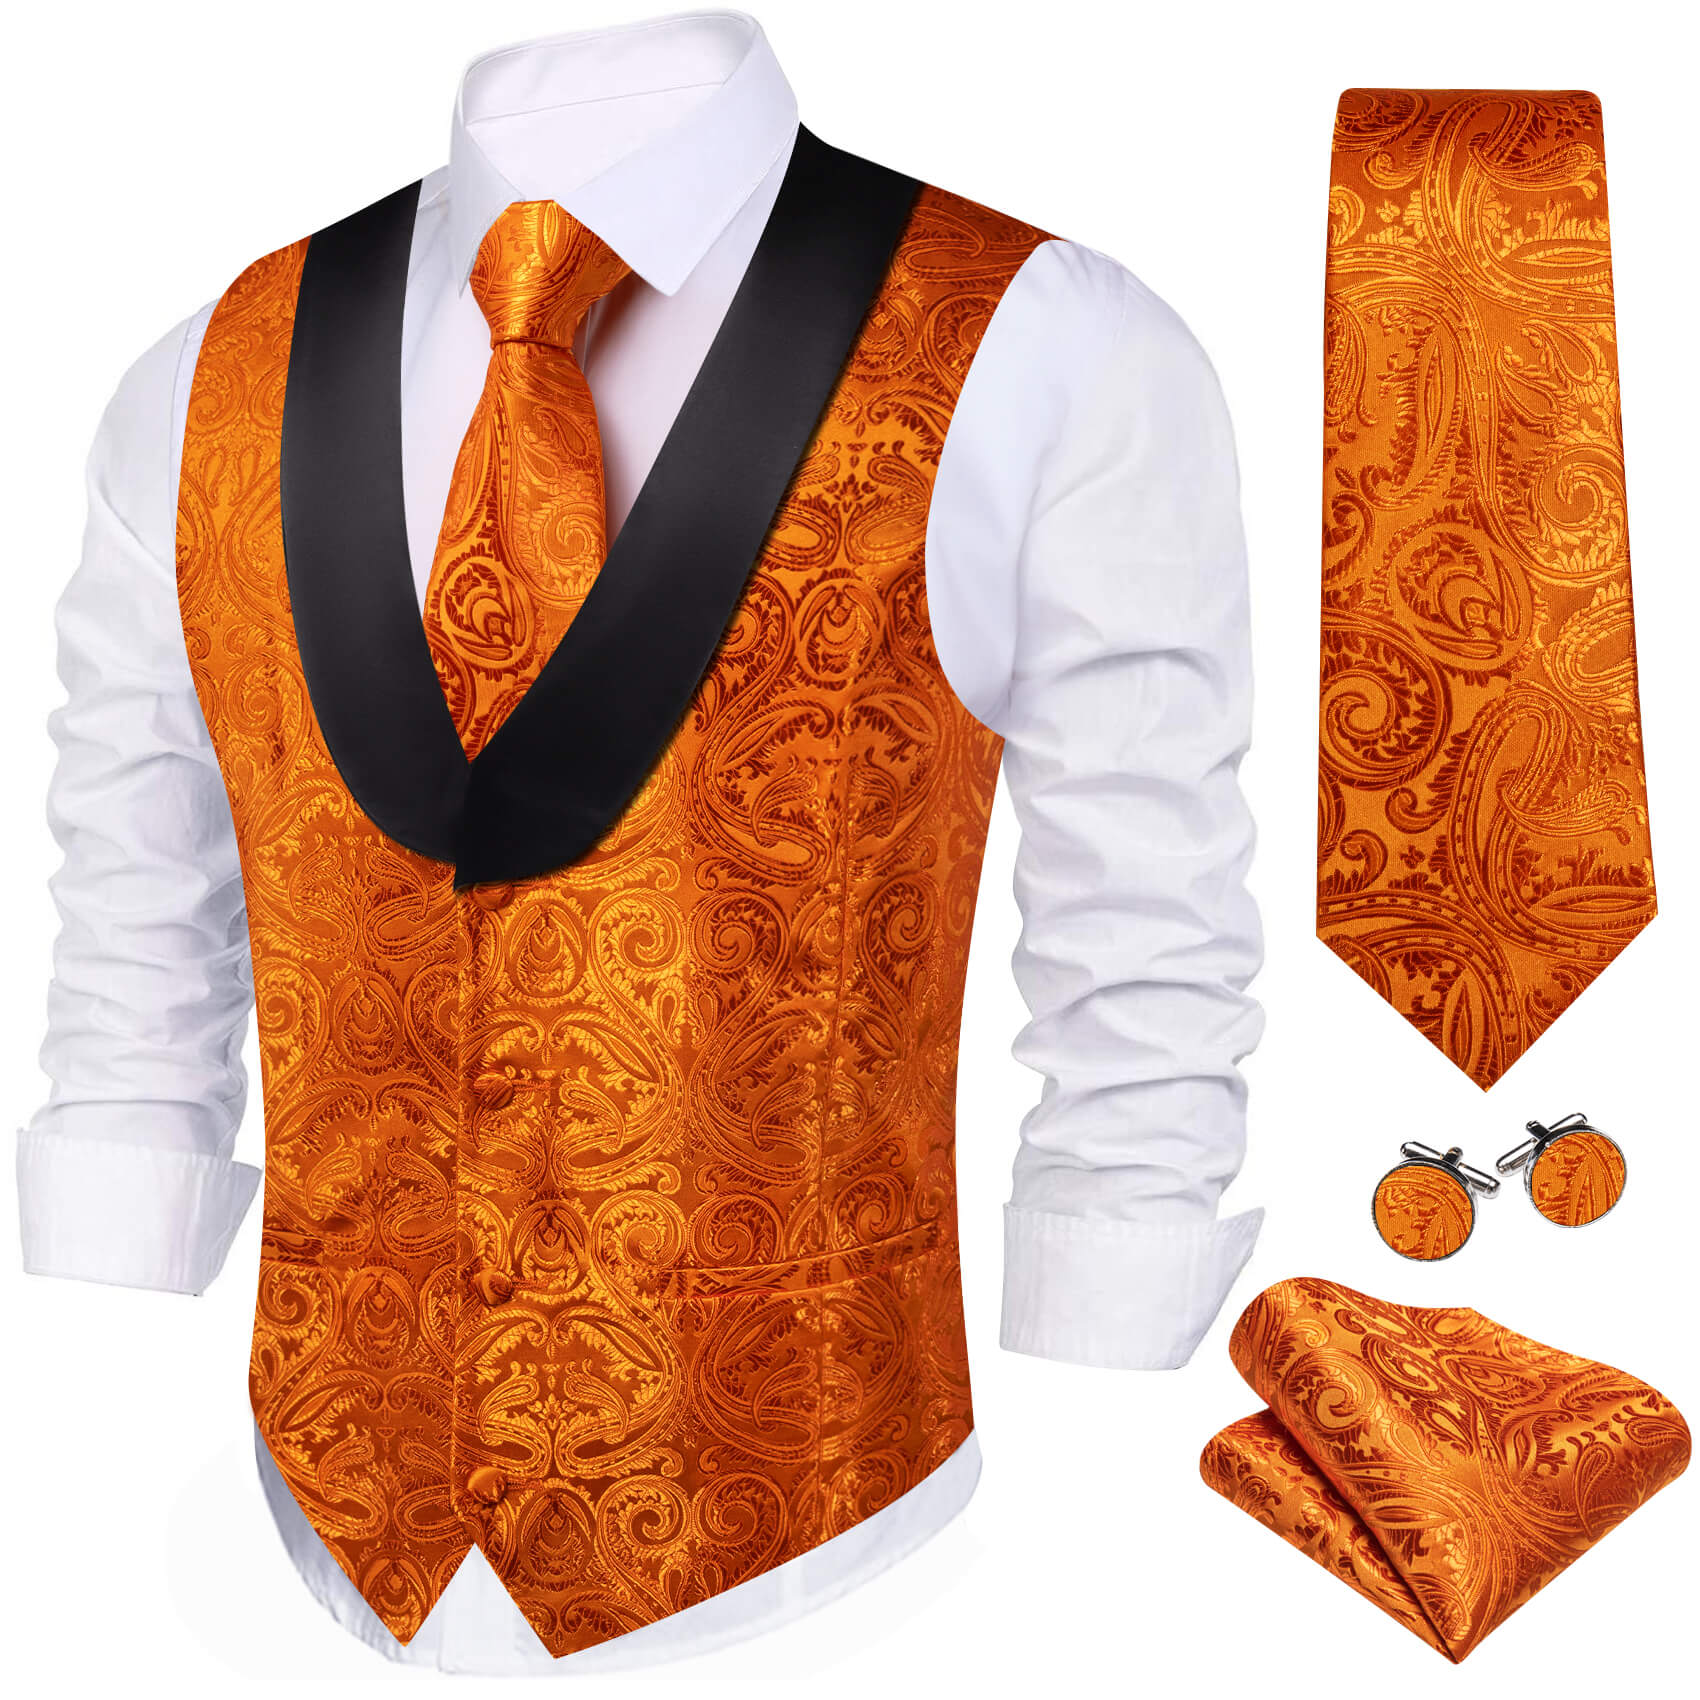 Barry.wang Men's Vest Fire Orange Paisley Shawl Collar Silk Vest Tie Set